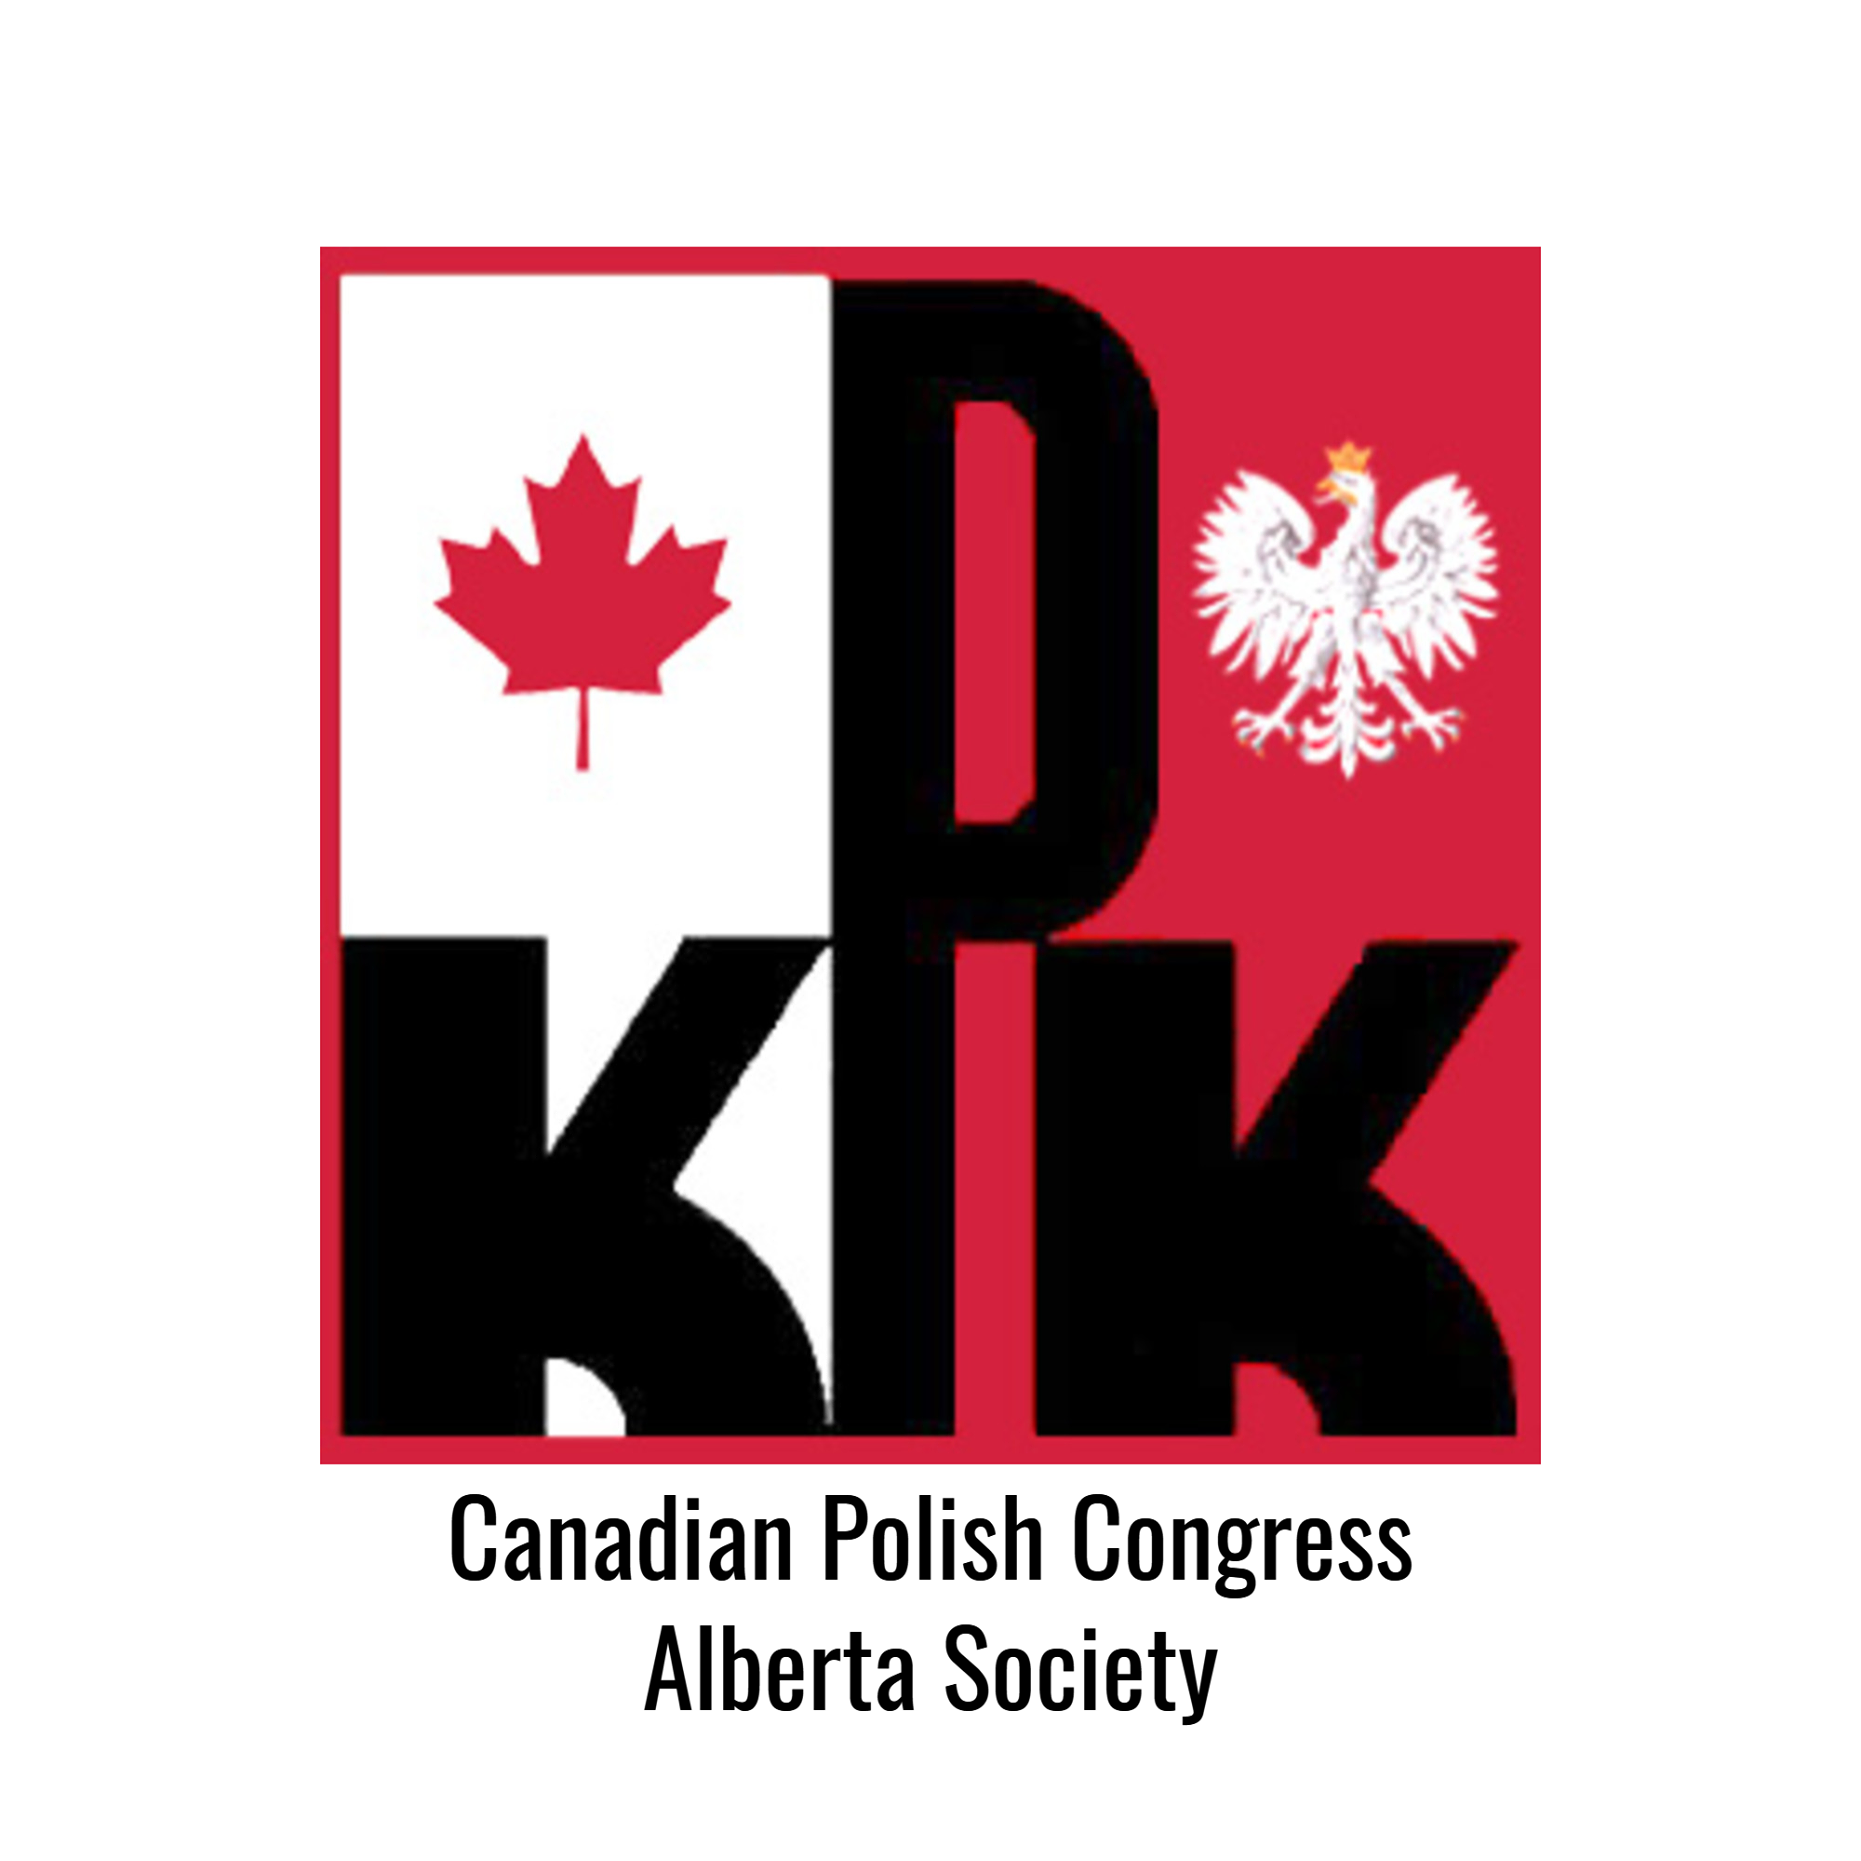 Polish Organizations in Canada - Canadian Polish Congress Alberta Society